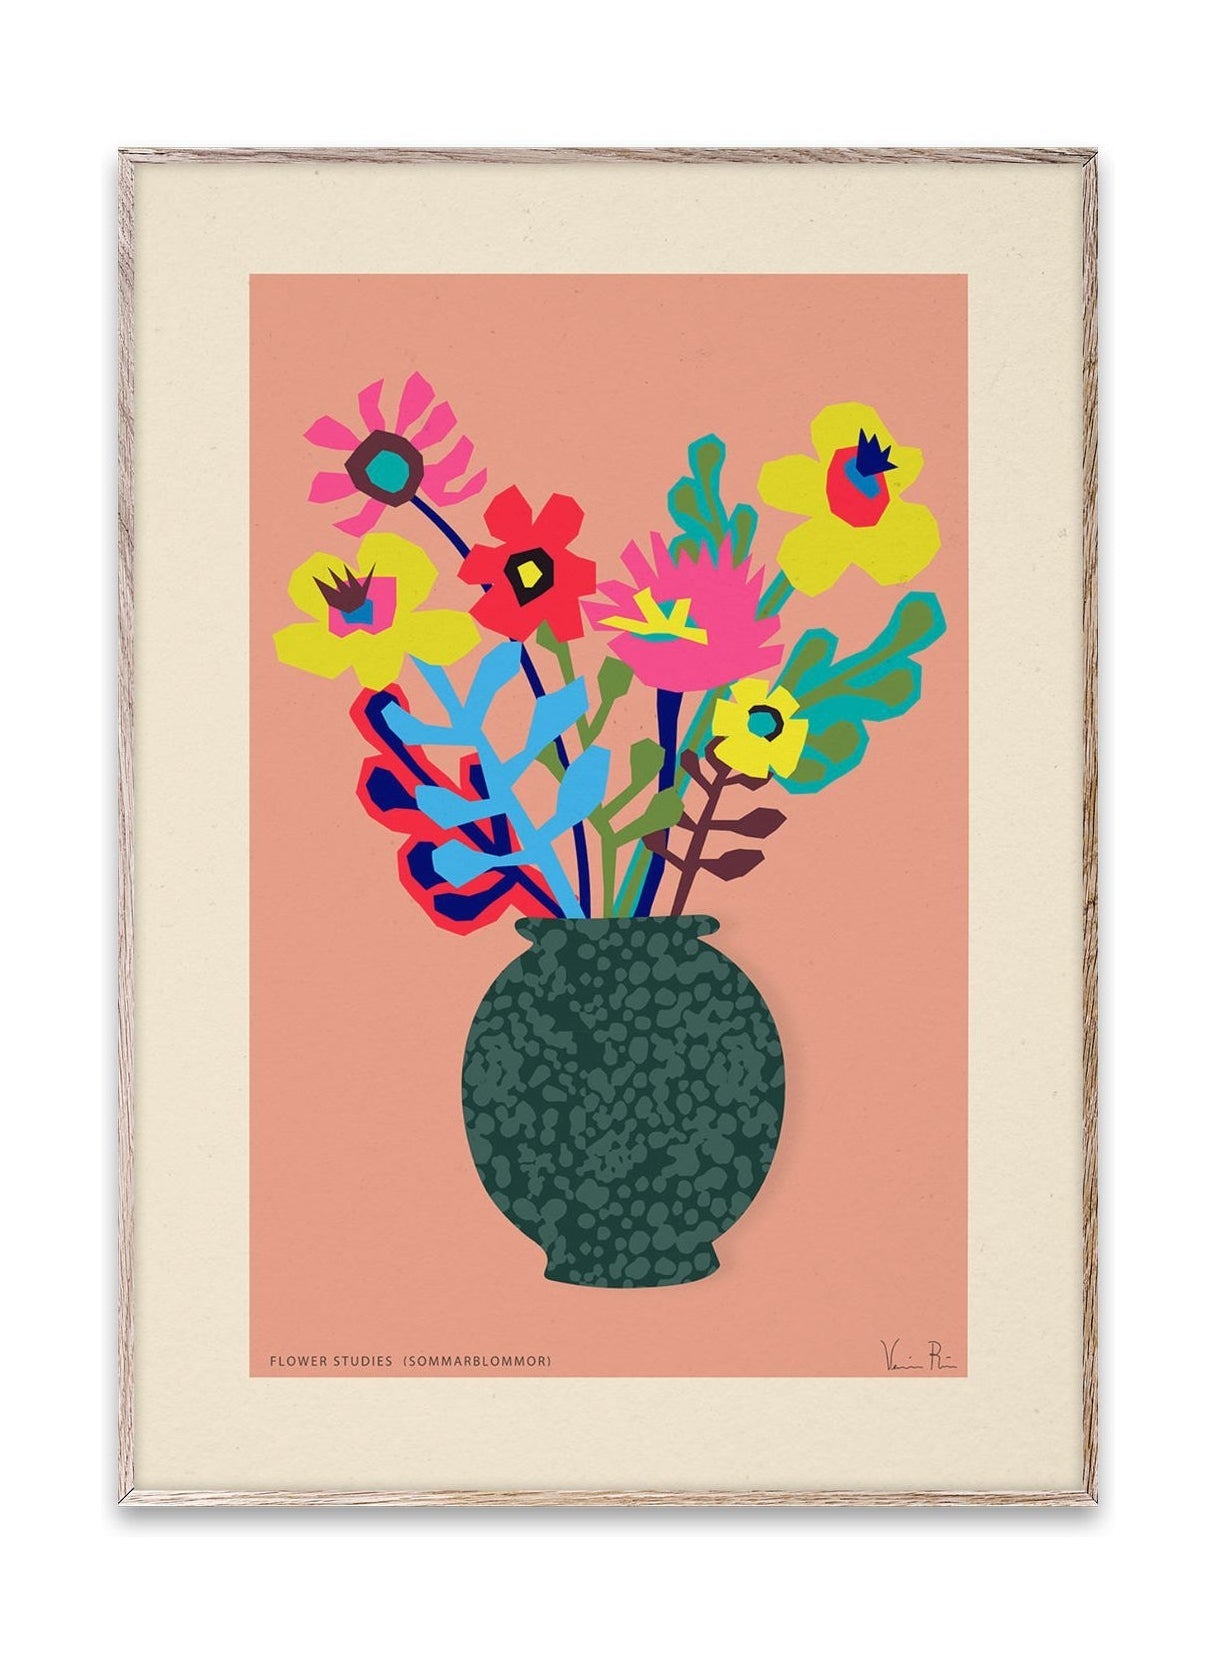 Papierkollektive Blumenstudien 02 (SOMMARBLOMMAR) Poster, 50 x 70 cm